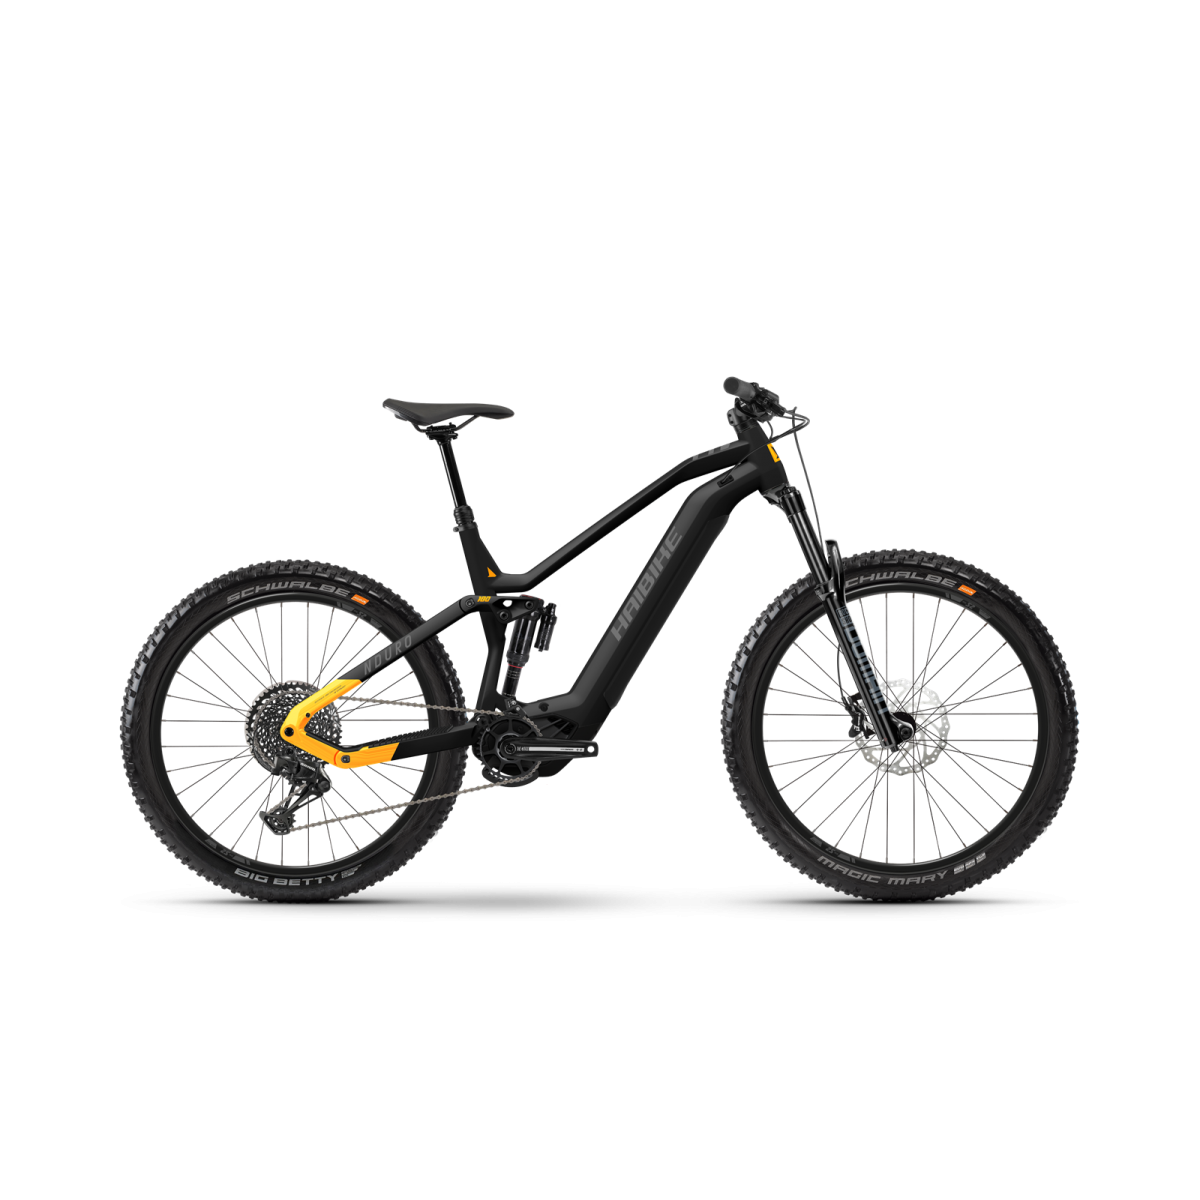 Bicicleta eléctrica de enduro Haibike Nduro 6 720Wh 29/27.5 Mullet 2023 180mm